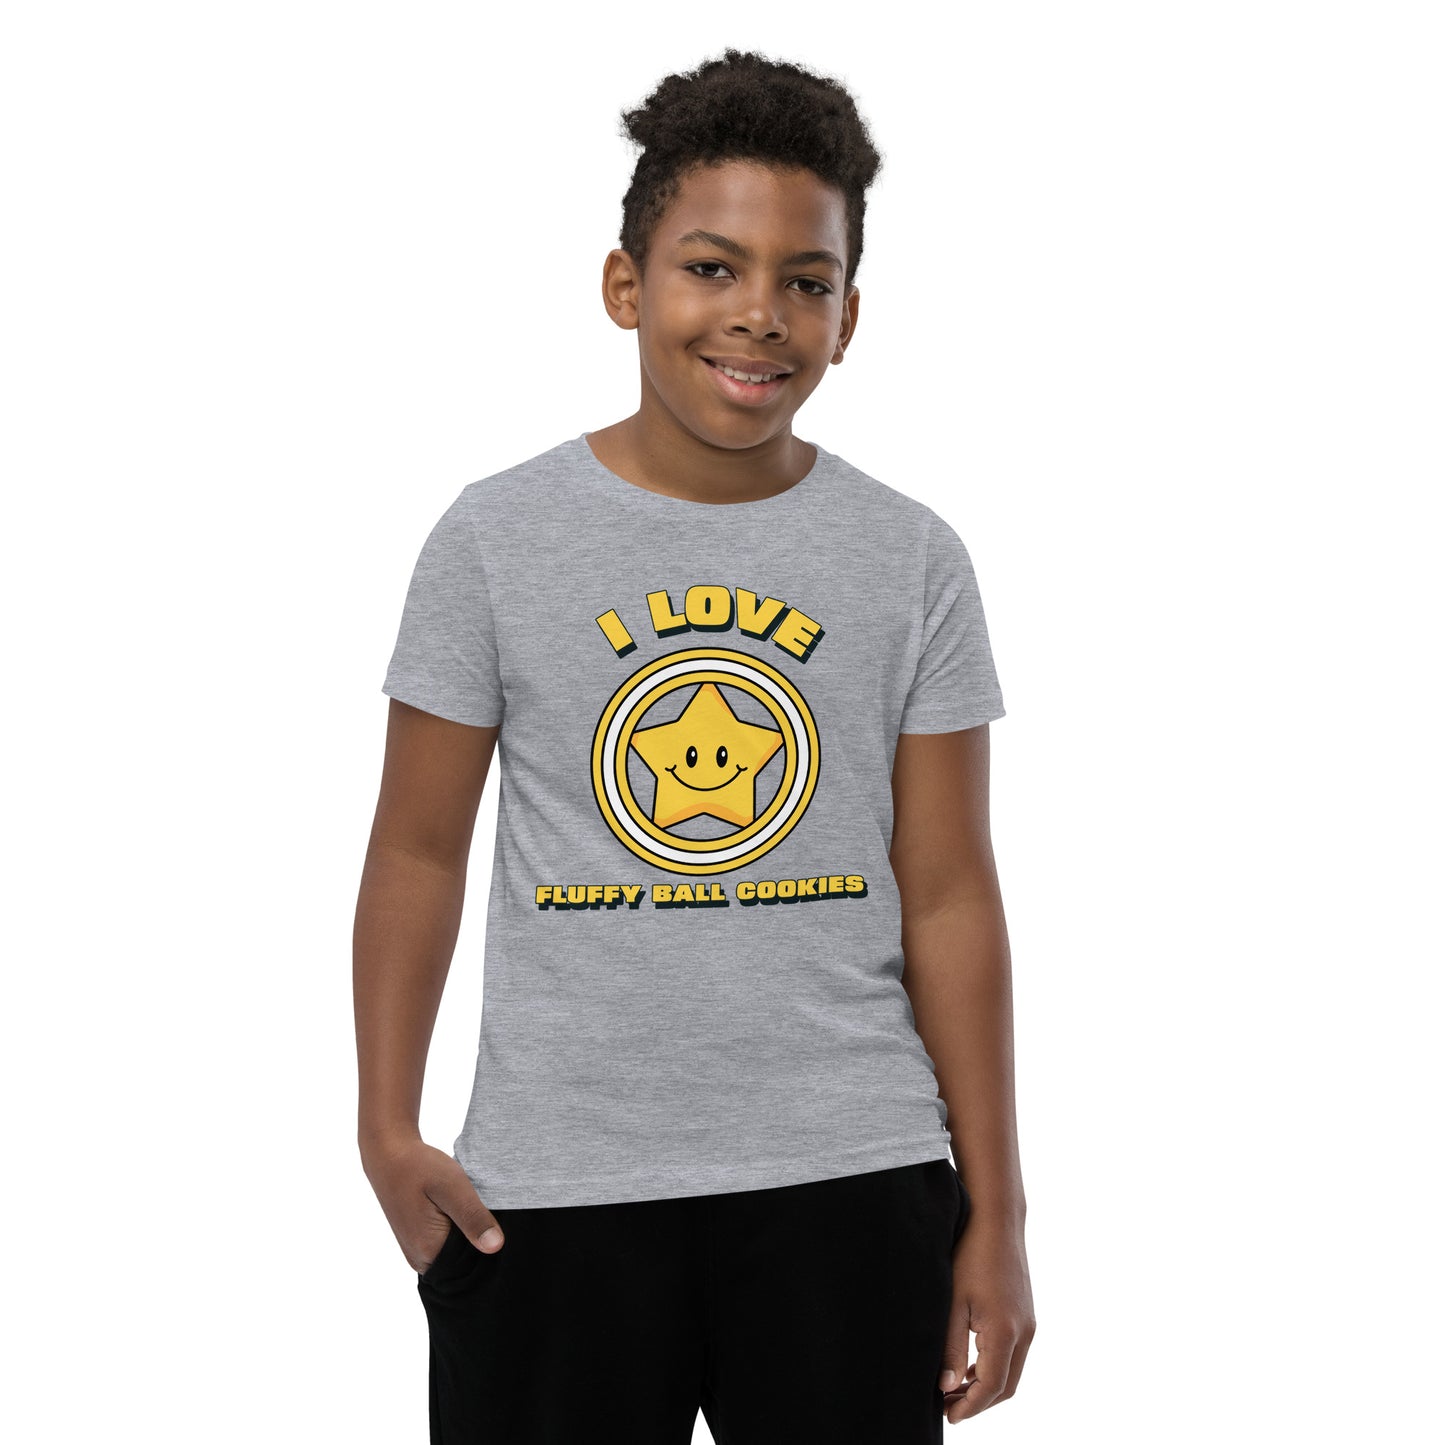 T-shirt Youth Star